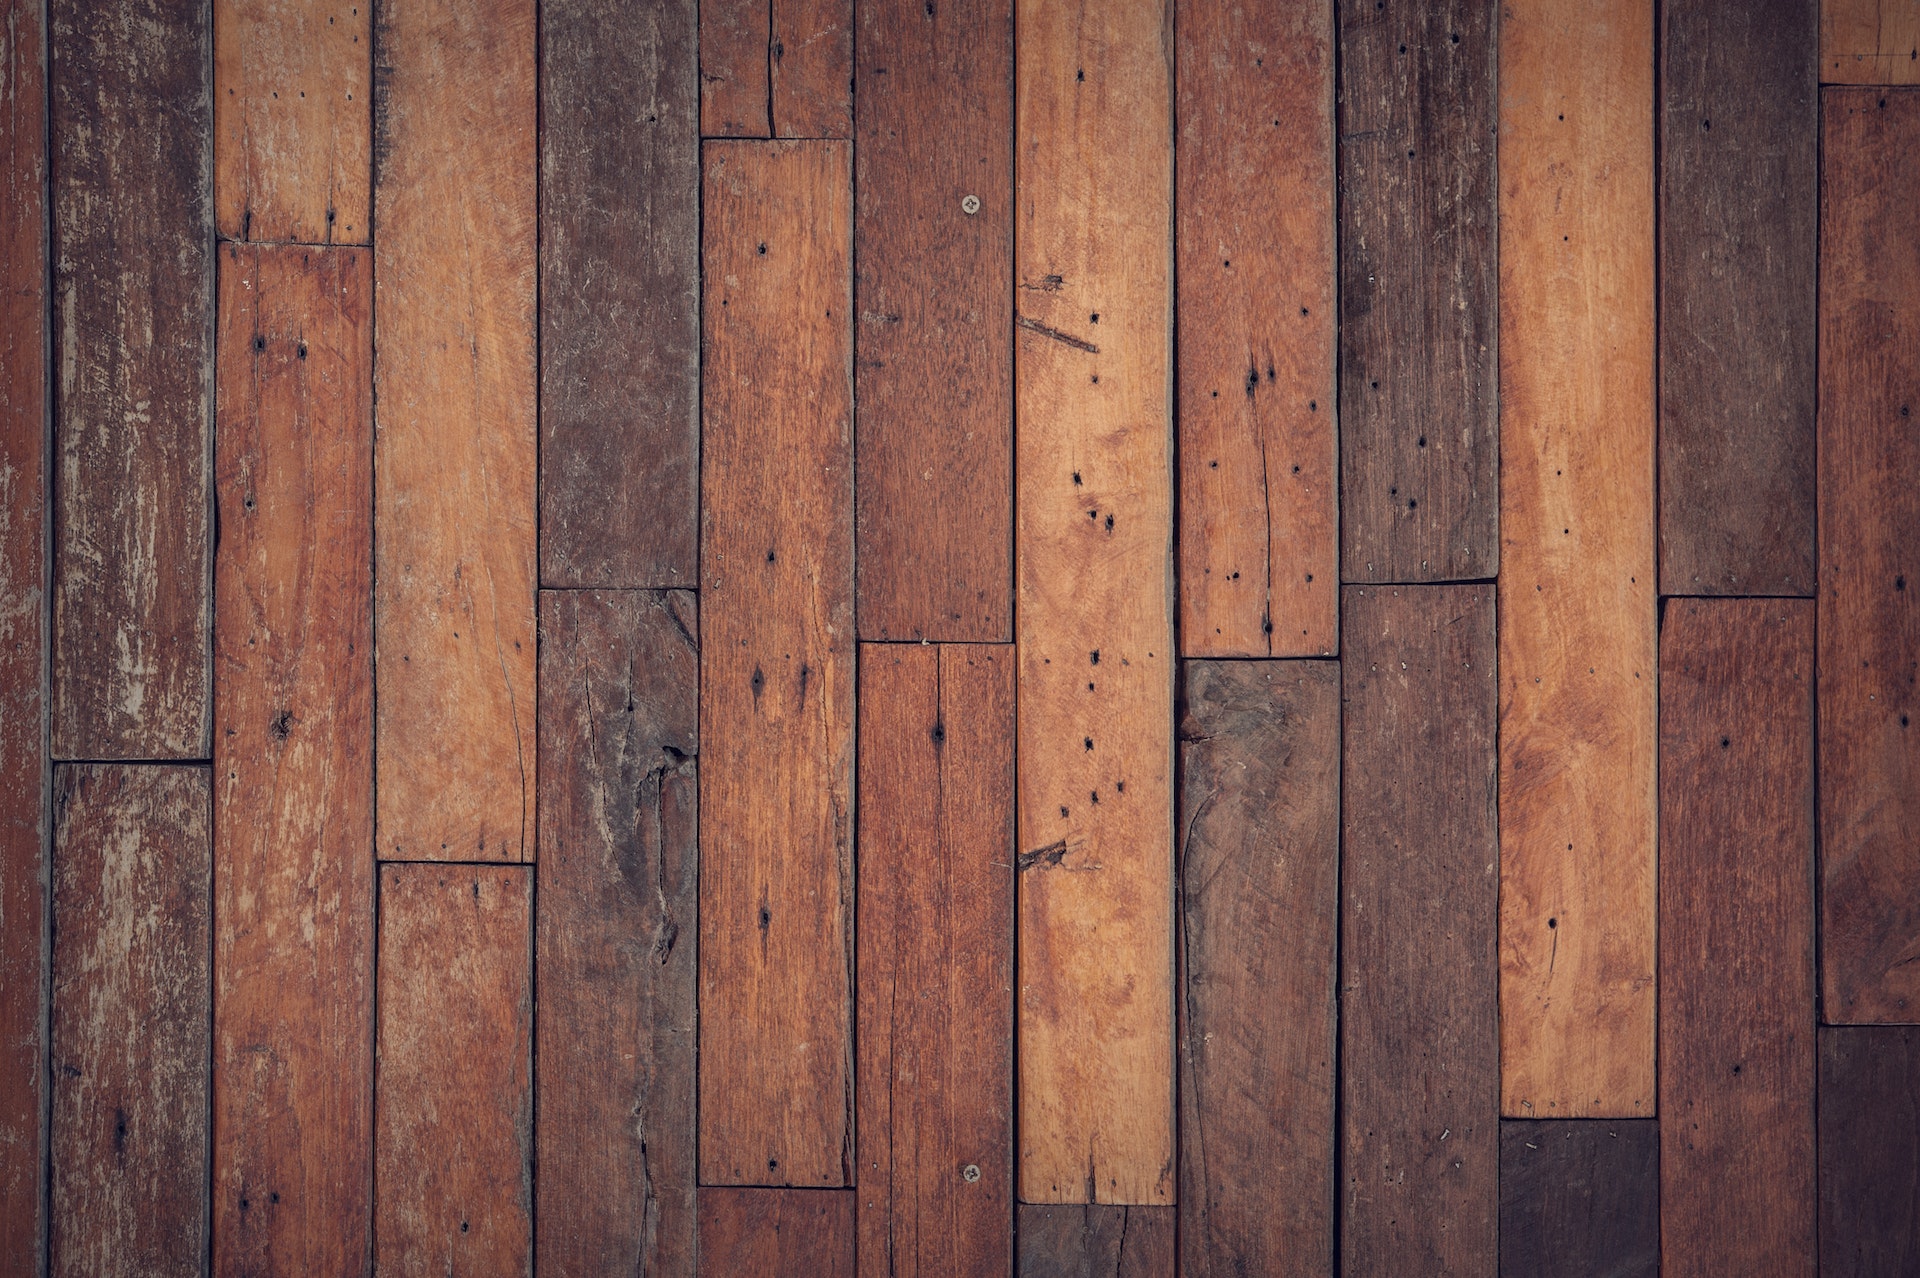 Hardwood flooring. Photo by: Pexels.com